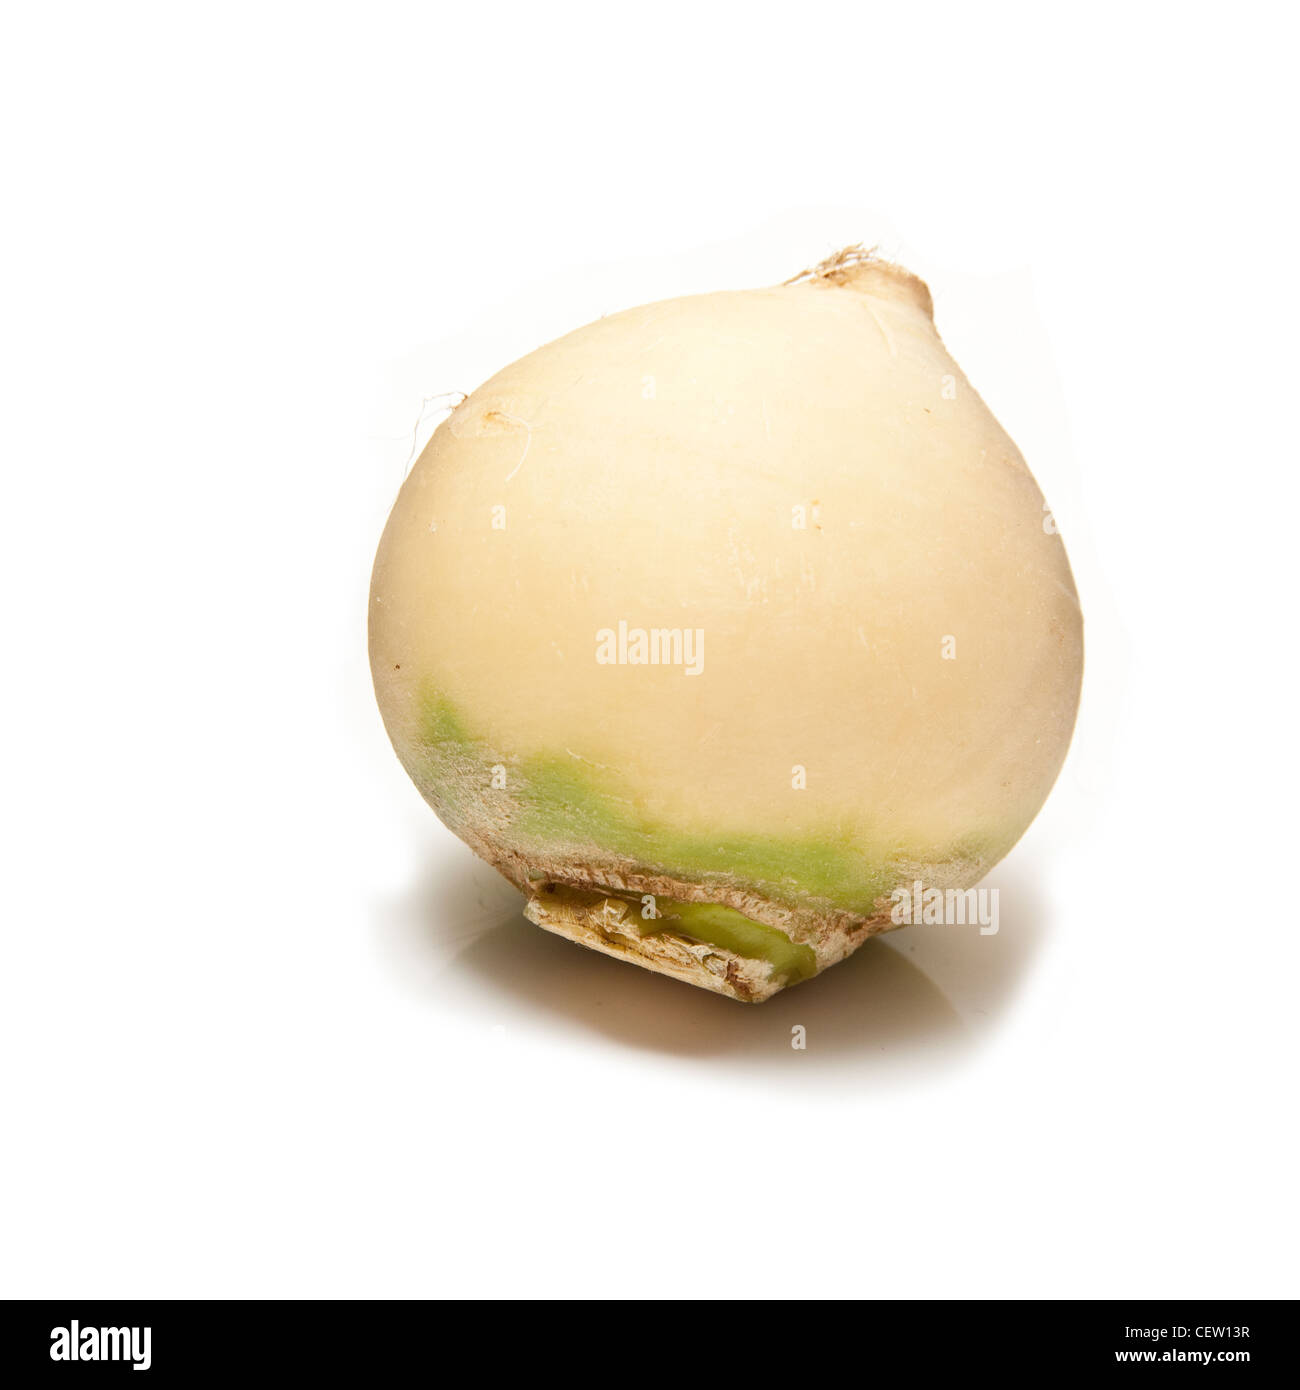 Turnip isolated on a white studio background. Stock Photo